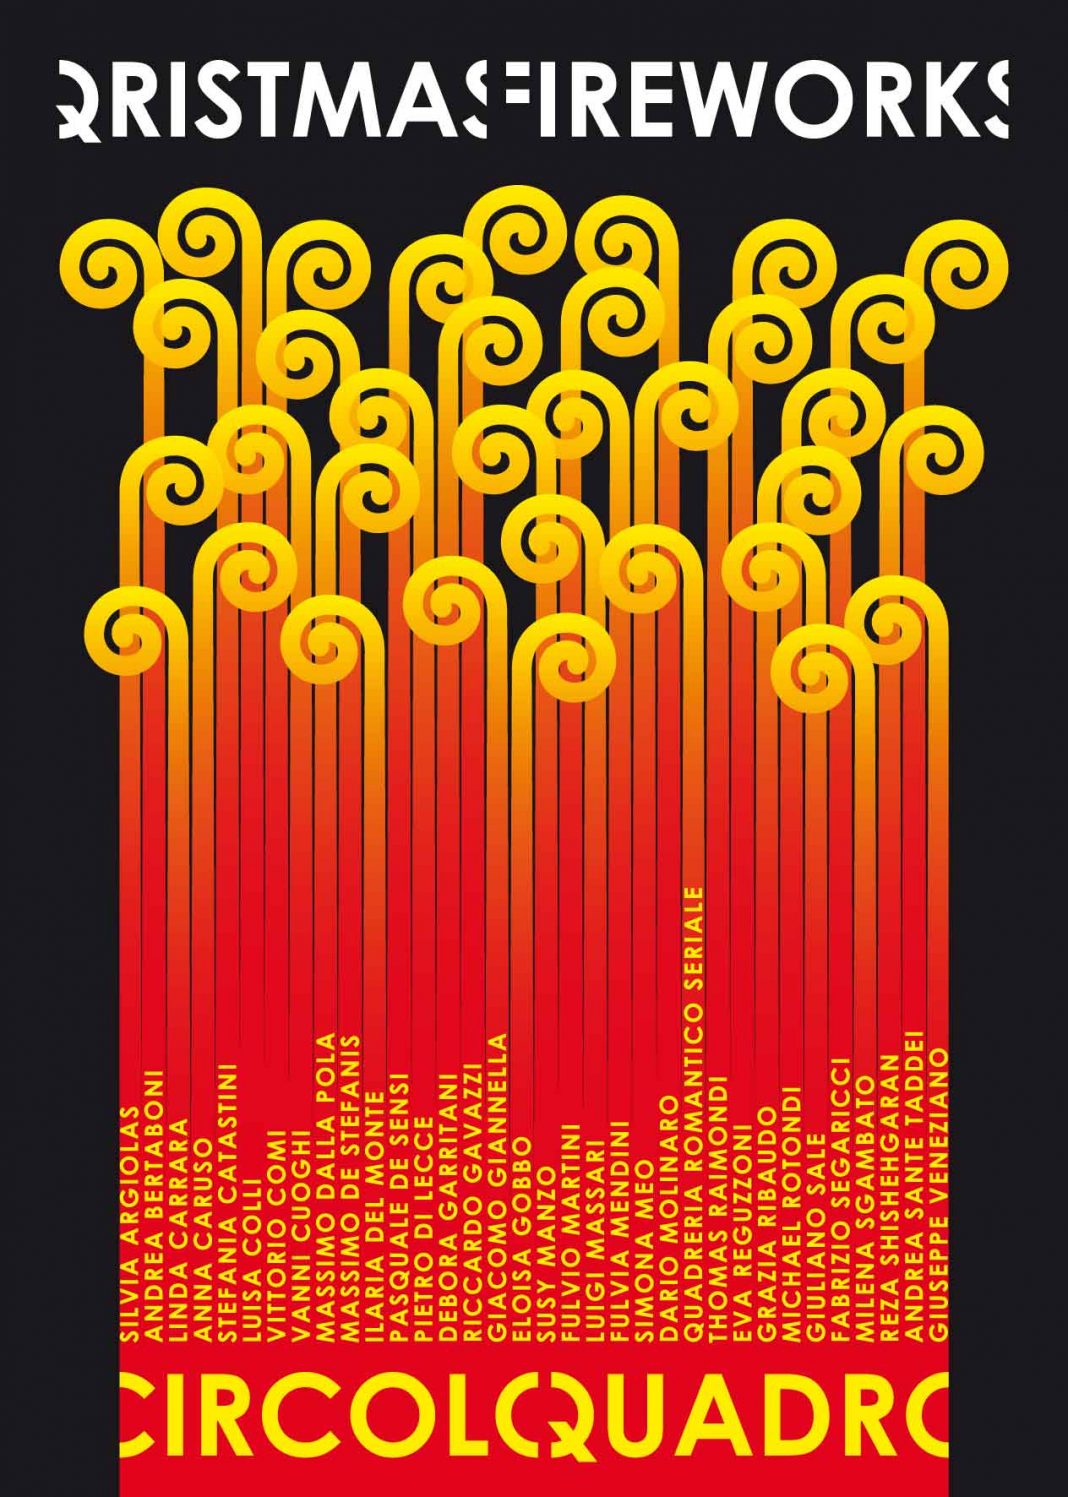 Qristmas fireworkshttps://www.exibart.com/repository/media/eventi/2012/11/qristmas-fireworks-1068x1497.jpg